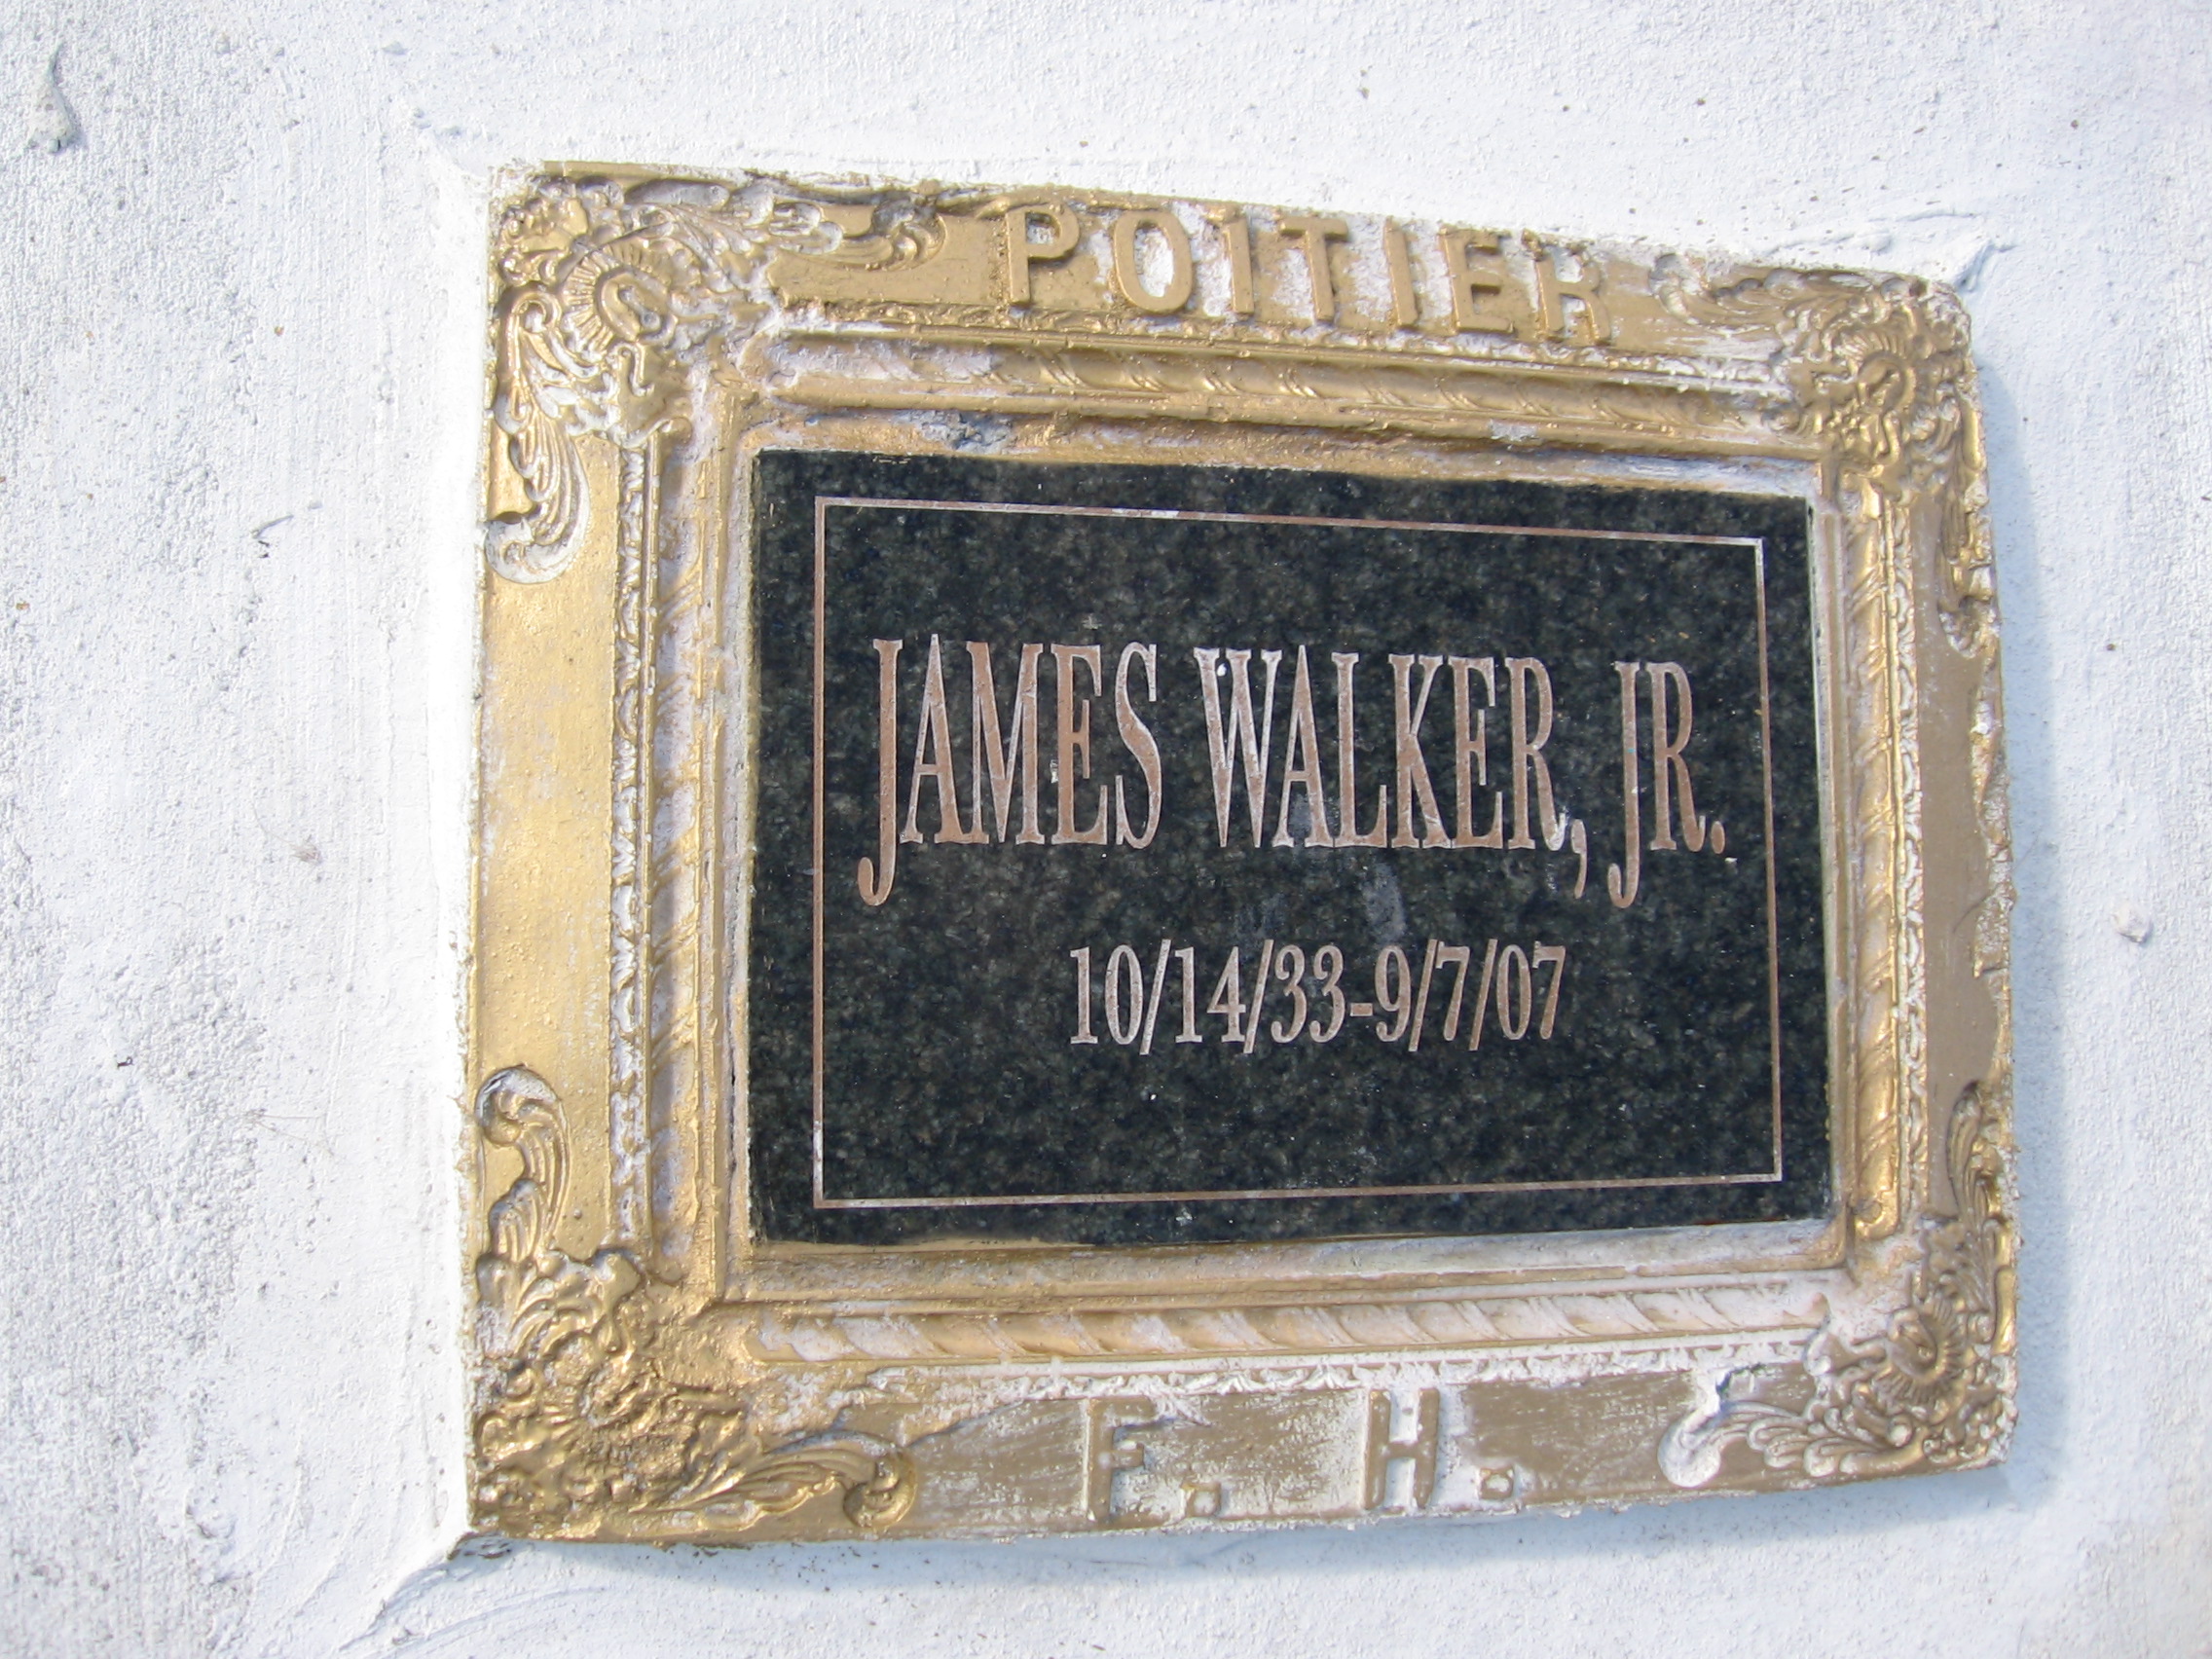 James Walker, Jr